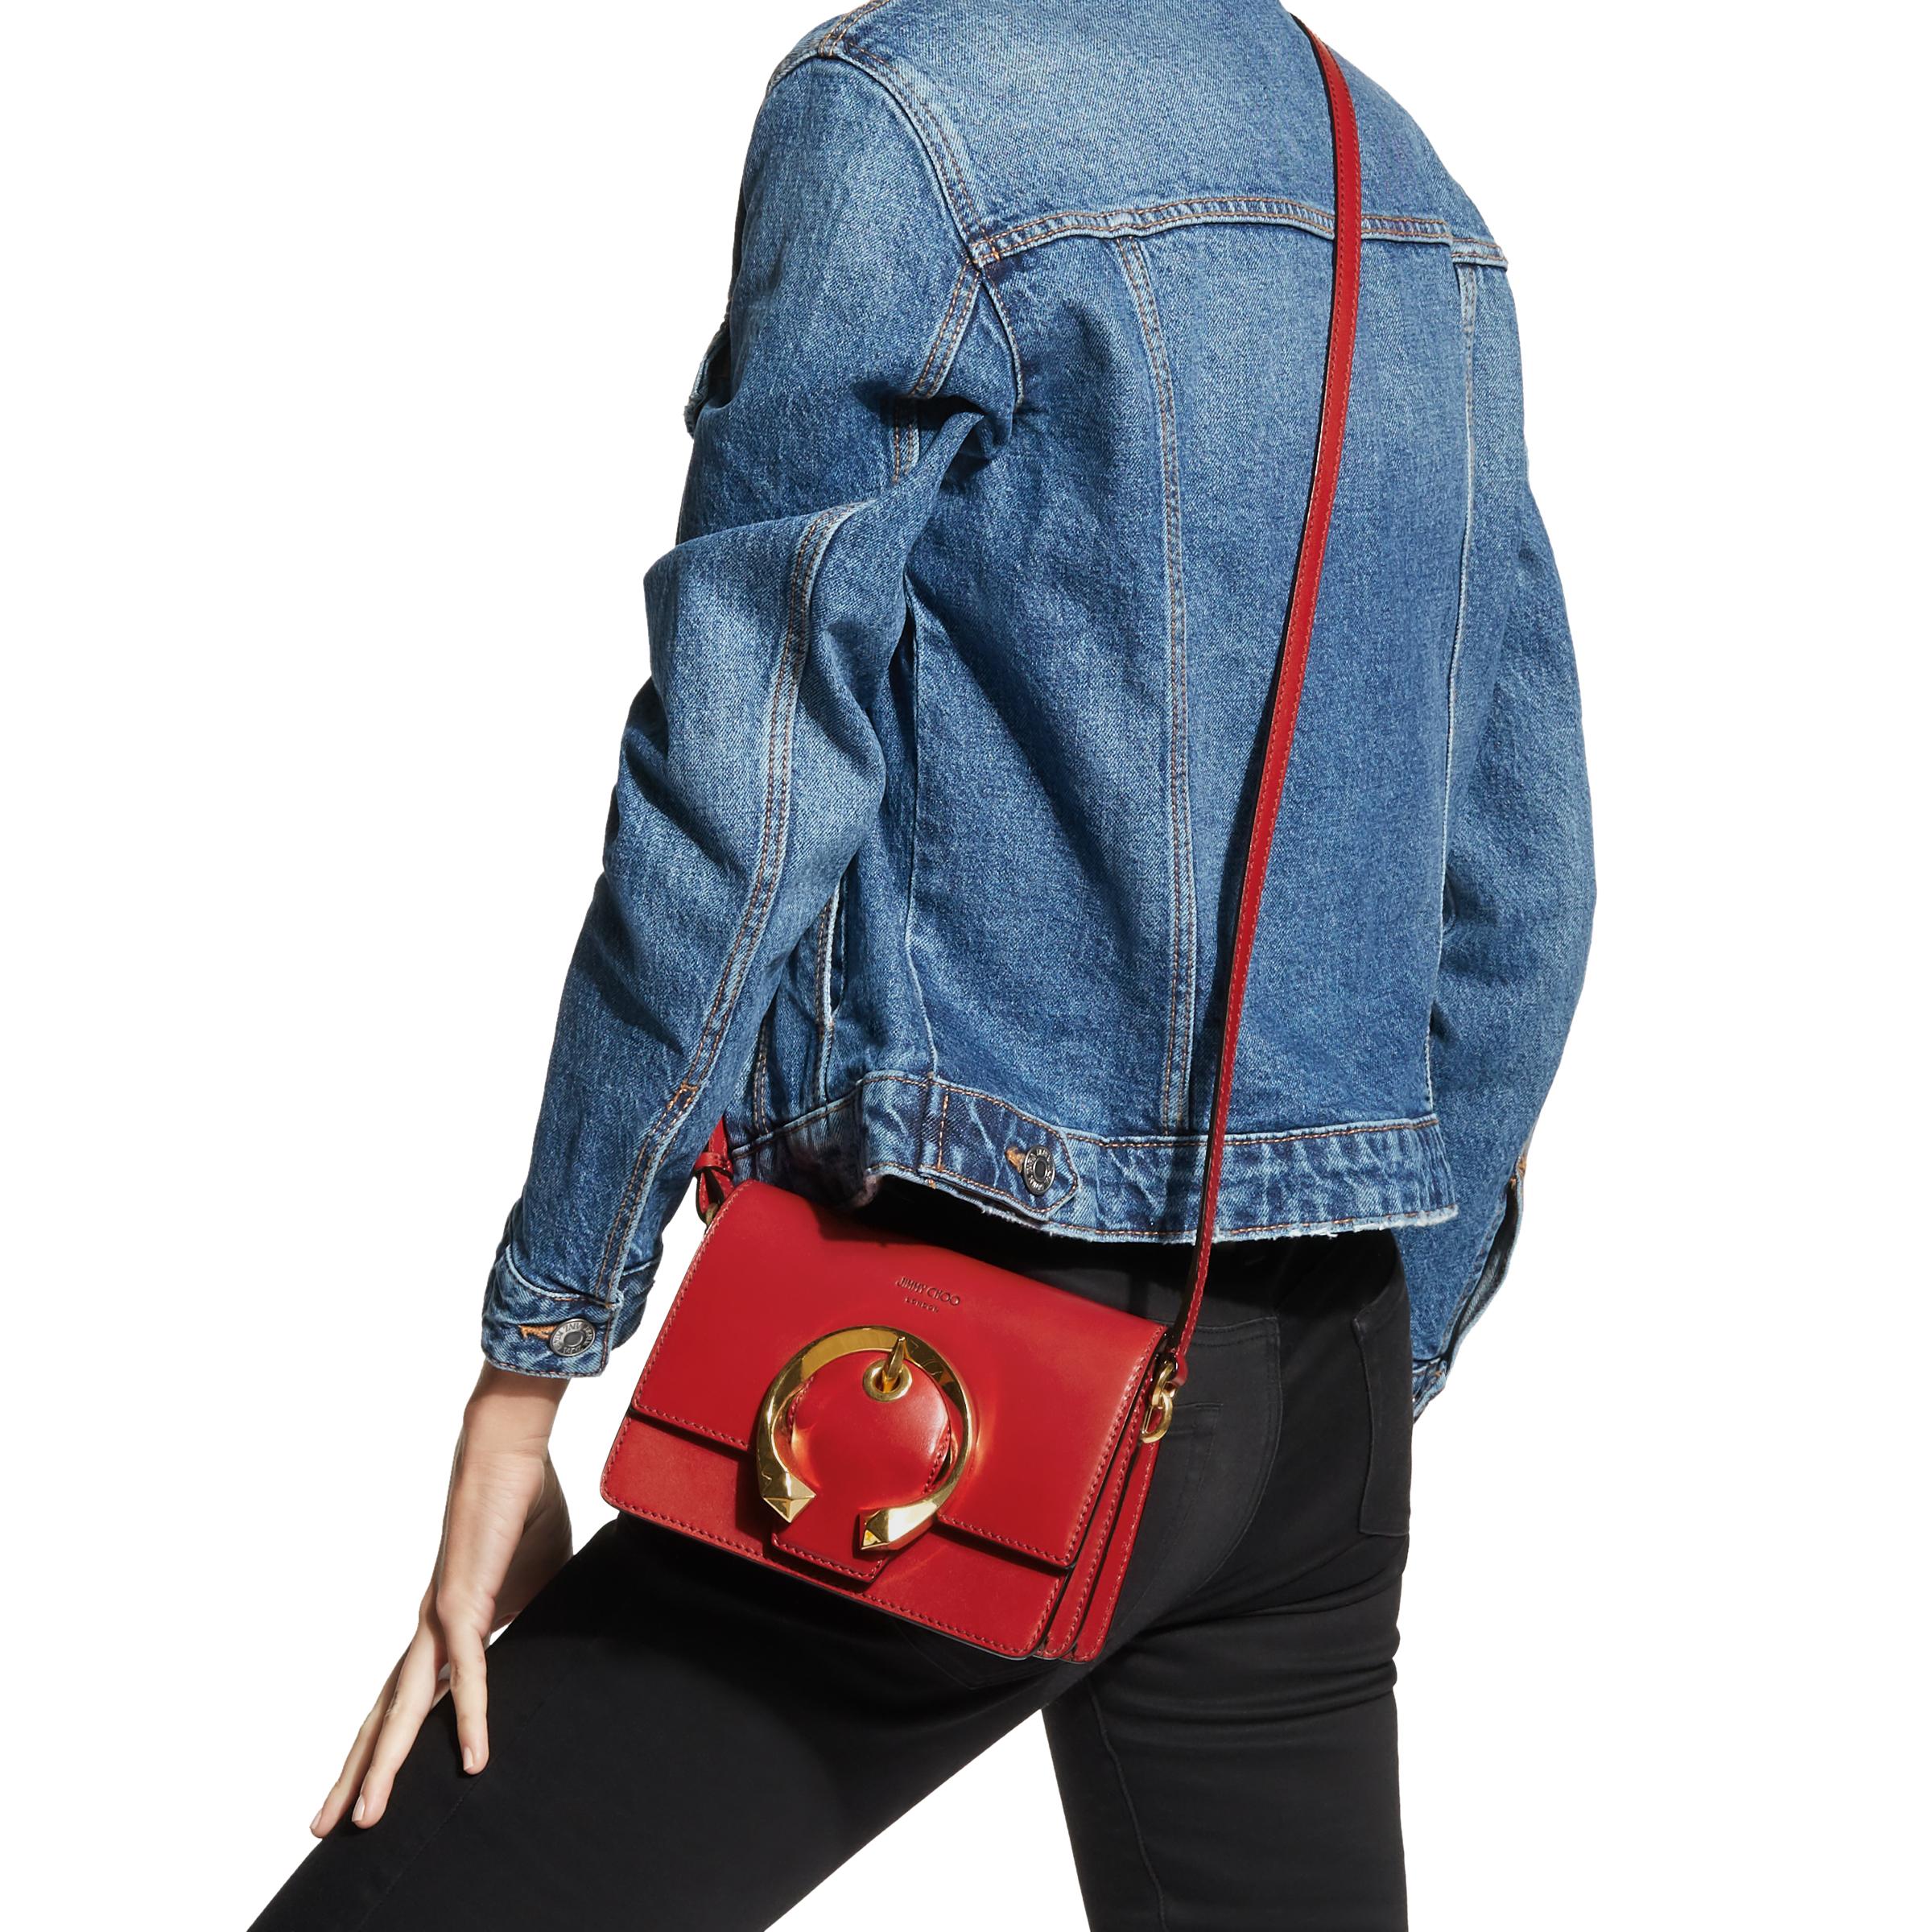 Jimmy Choo Leather Madeline Shoulder Bag in Red - Lyst